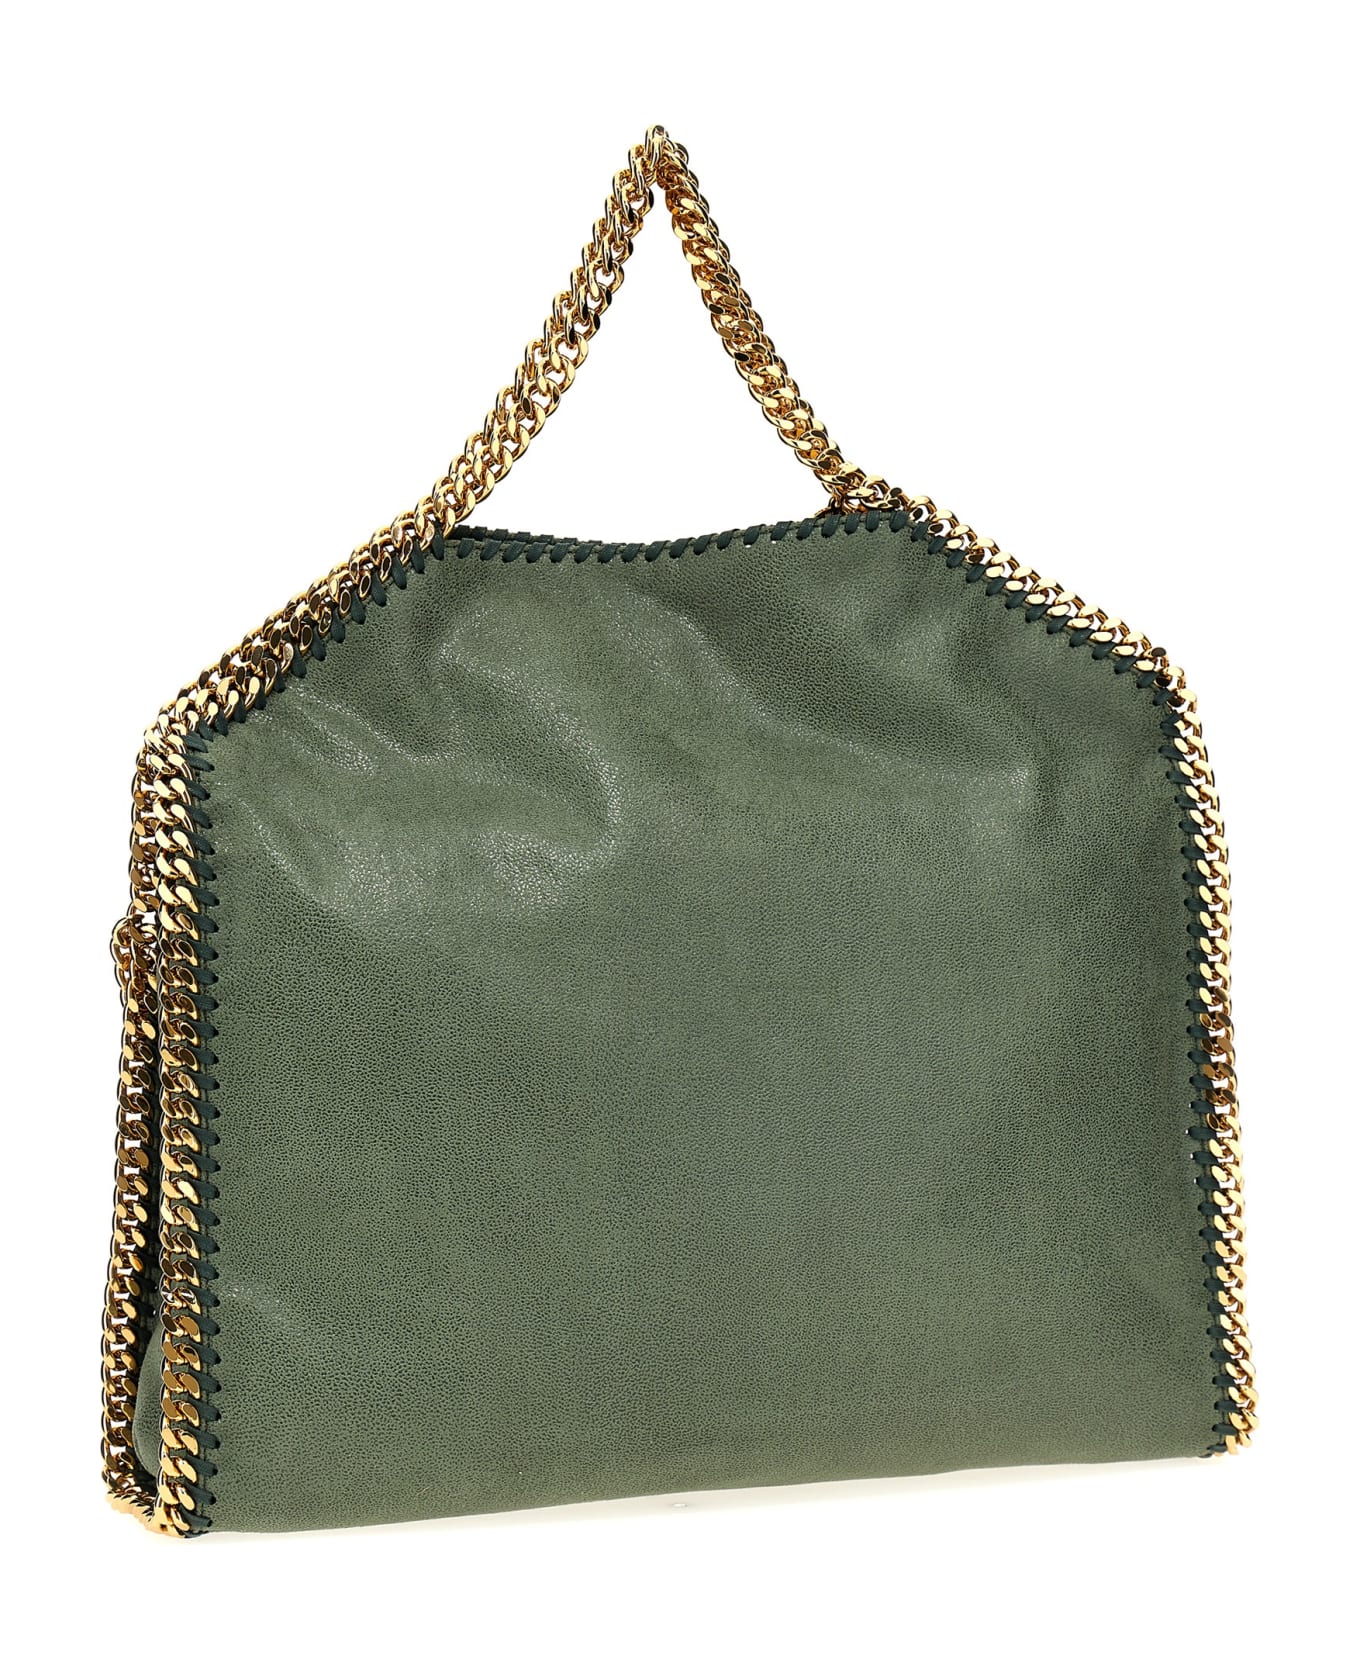 Stella McCartney Falabella 3 Chain Handbag - Stone Green トートバッグ